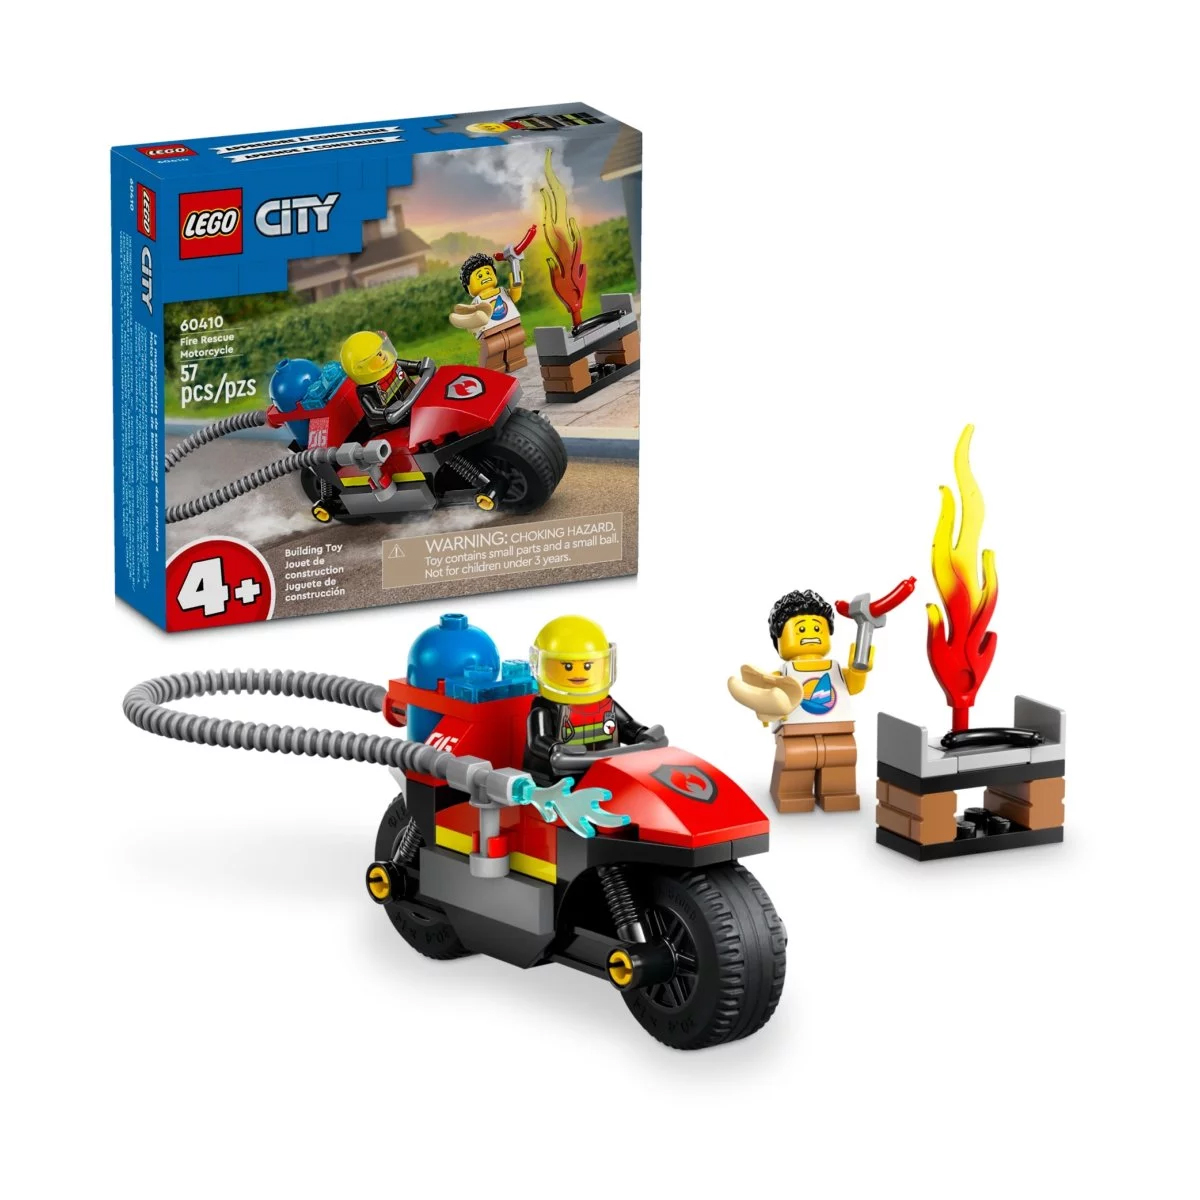 Конструктор Lego City Fire Rescue Motorcycle 60410, 57 деталей конструктор lego city fire rescue helicopter 60411 85 деталей